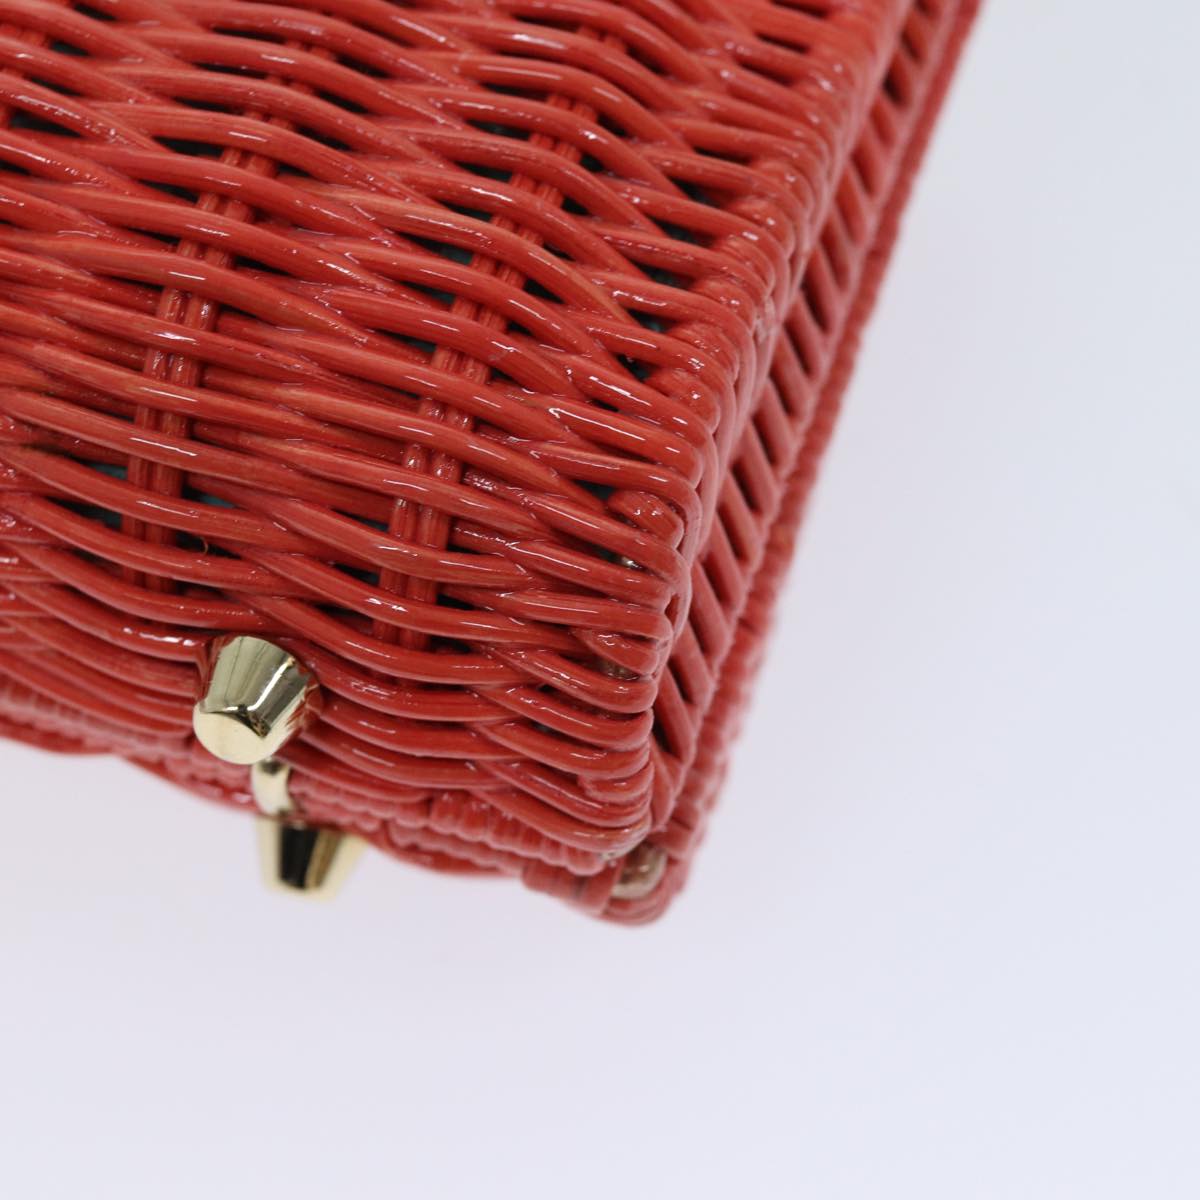 TIFFANY&Co. Chain Basket bag Shoulder Bag Wood Red Auth am6066